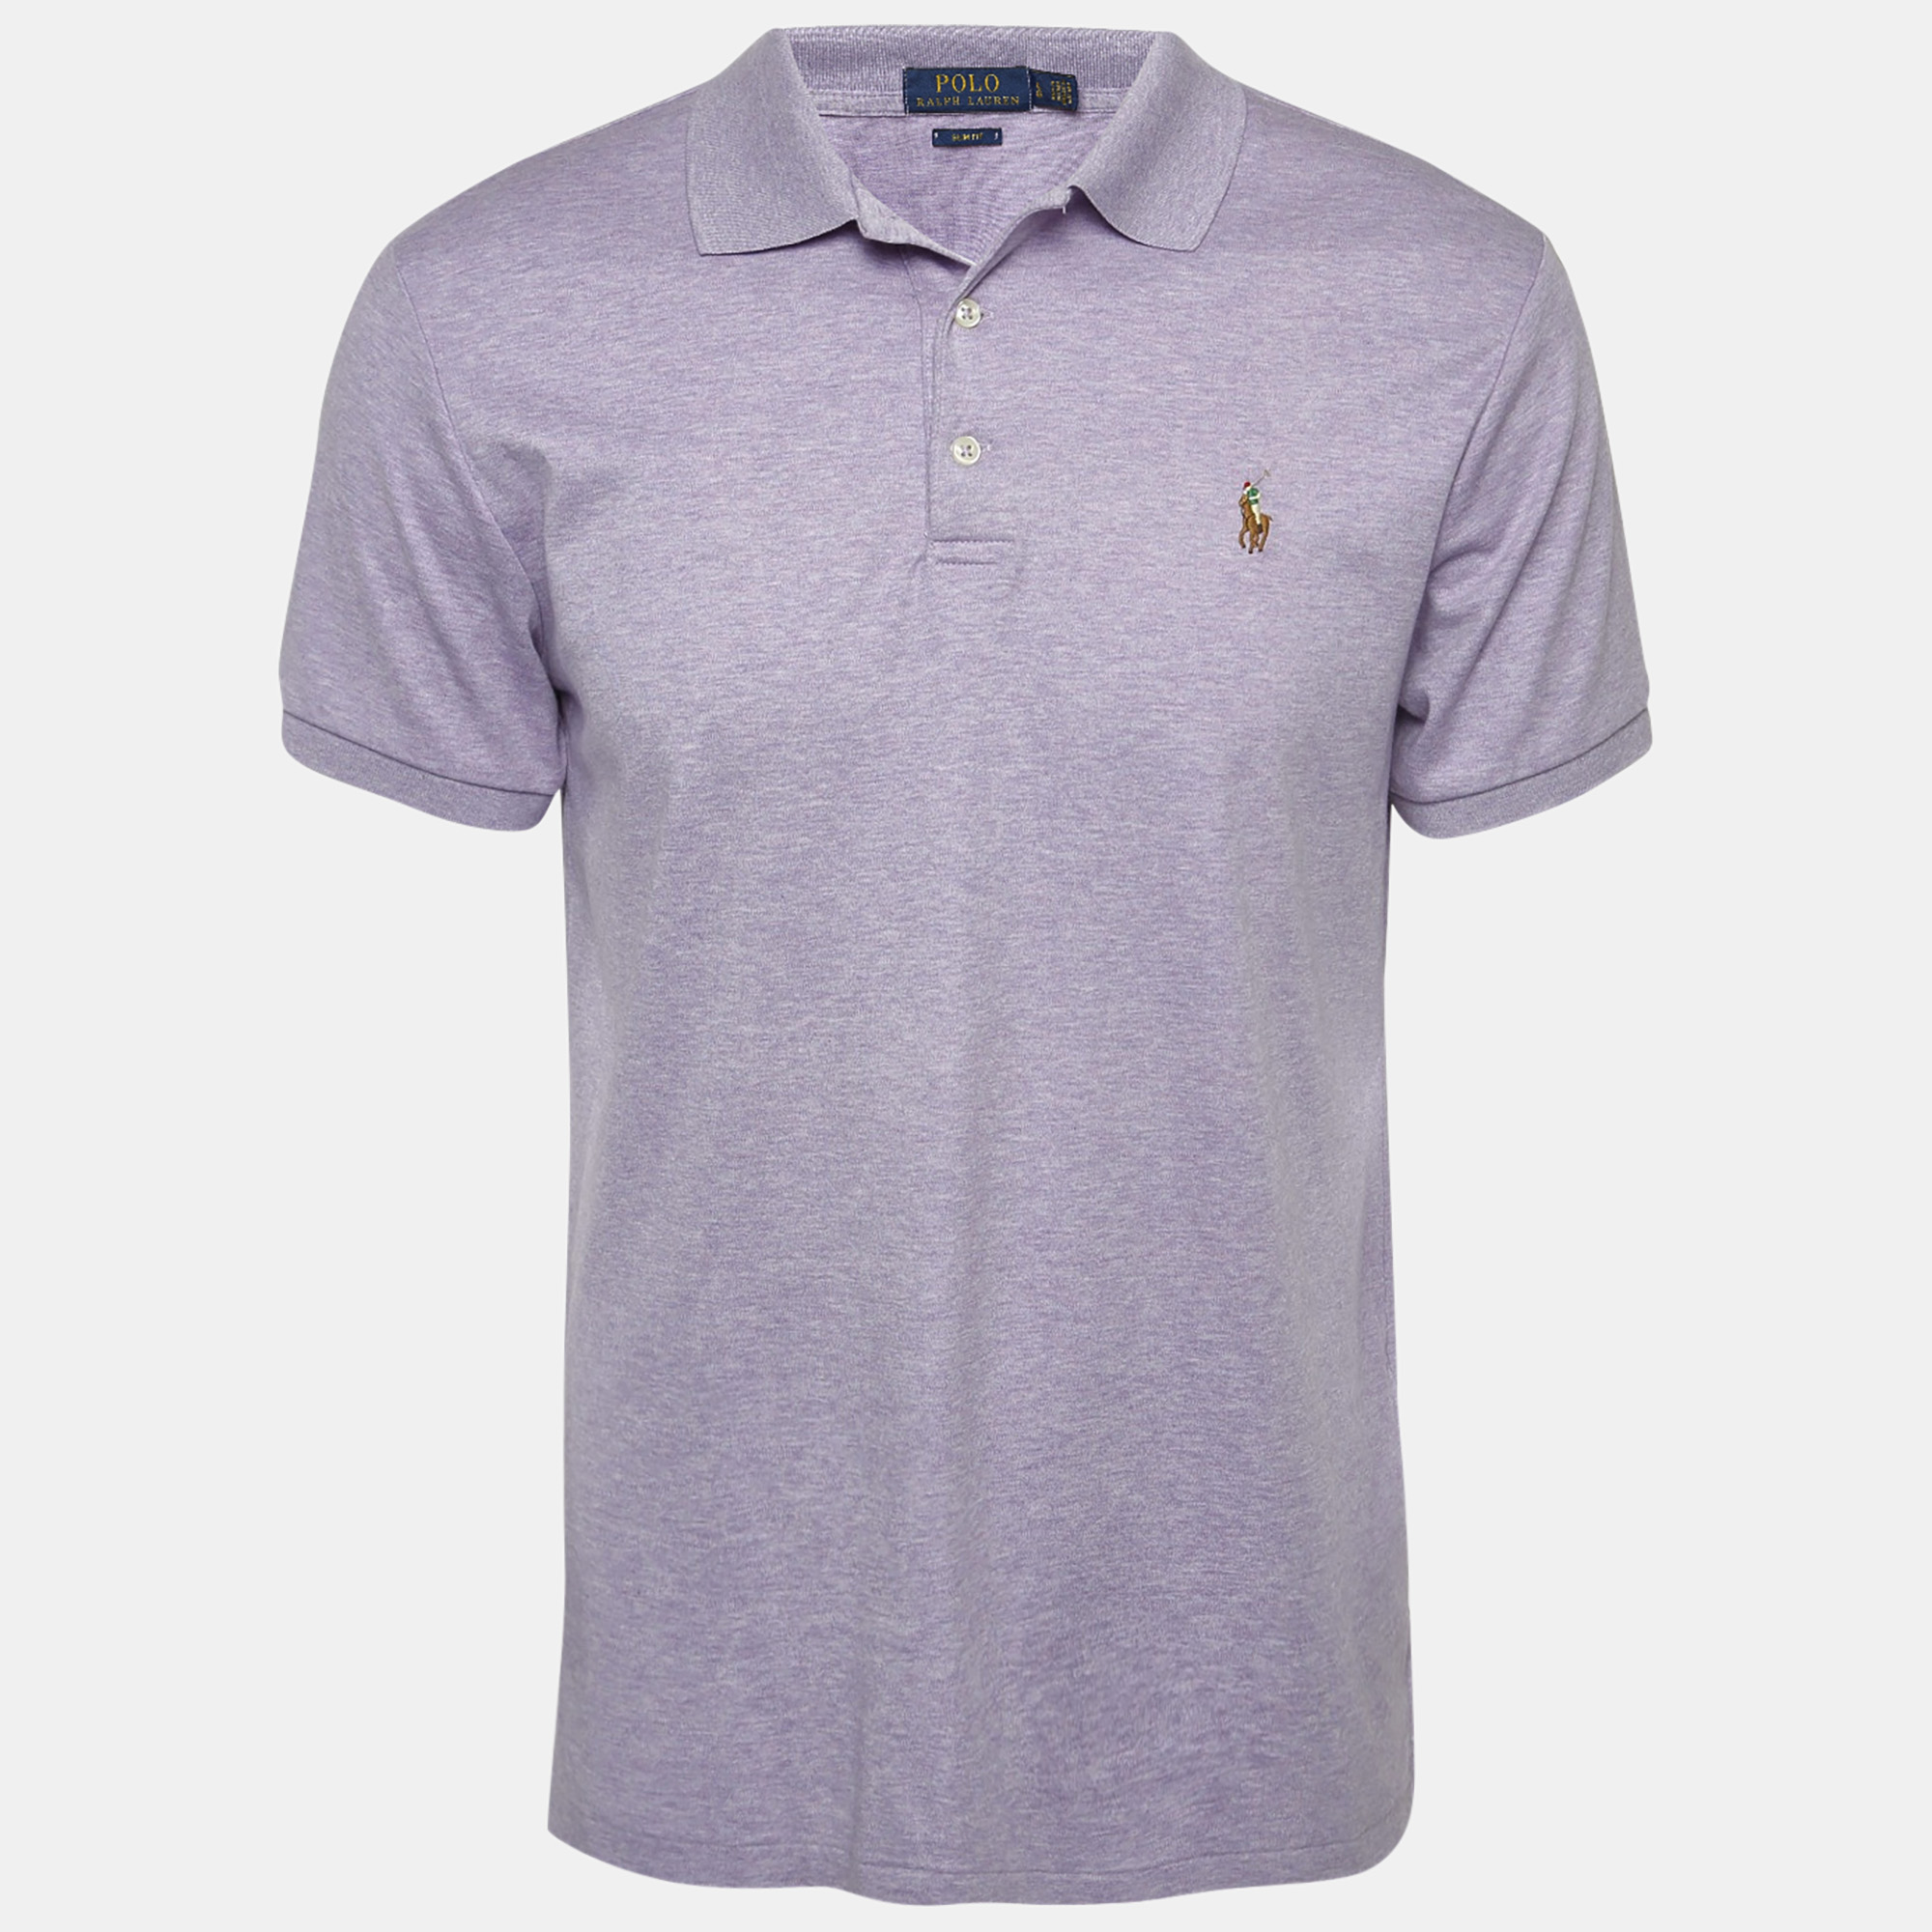 Polo ralph lauren light purple cotton jersey polo t-shirt l